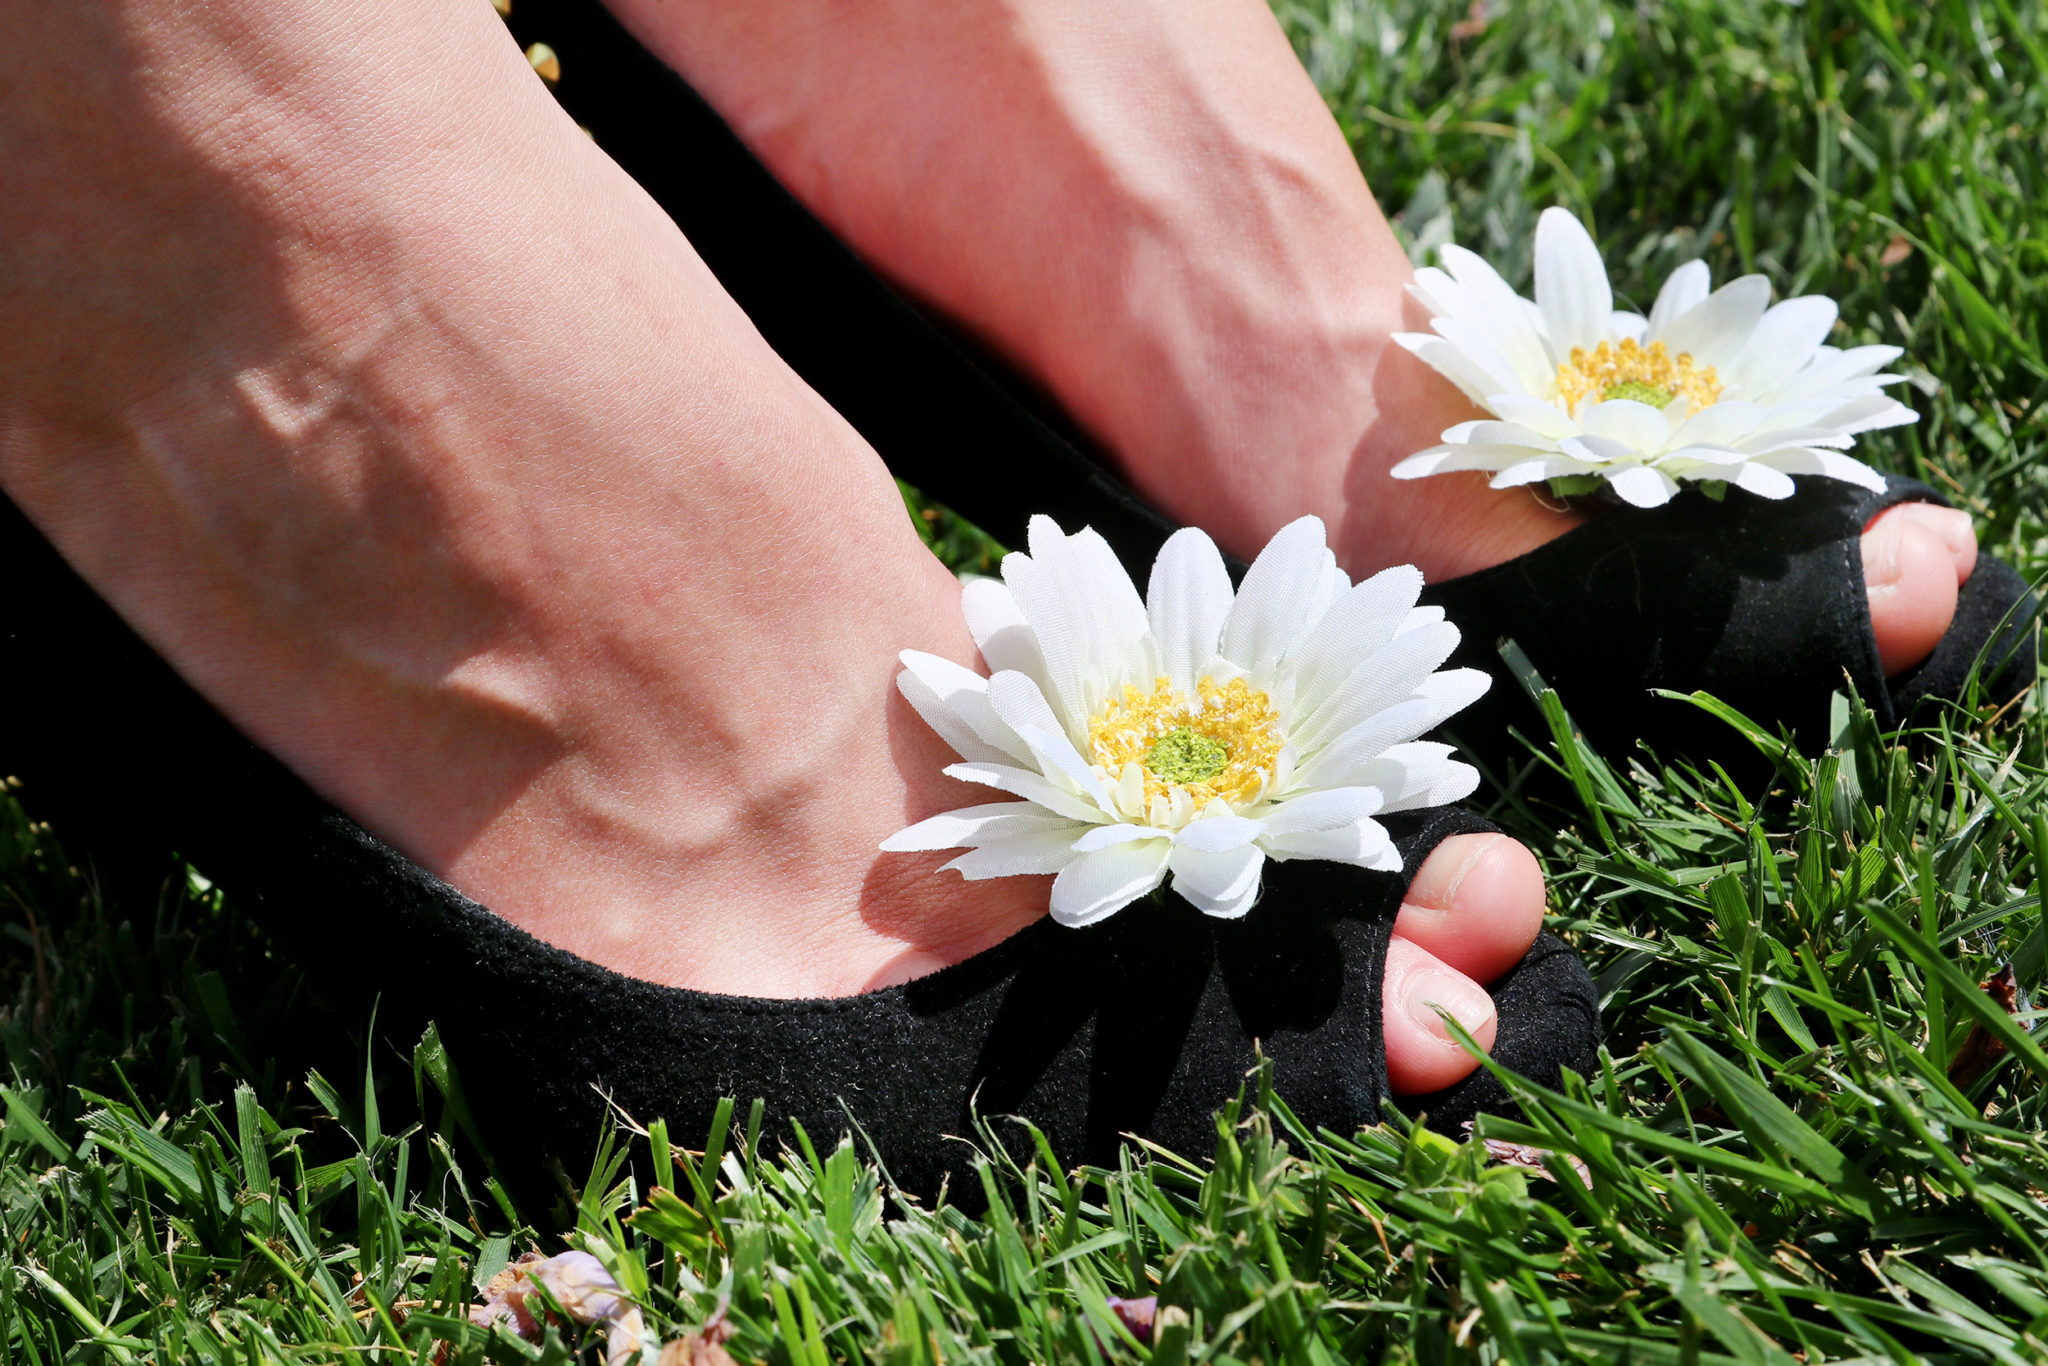 5 DIY Shoe Clips for Prom or Weddings - HGTV Handmade 